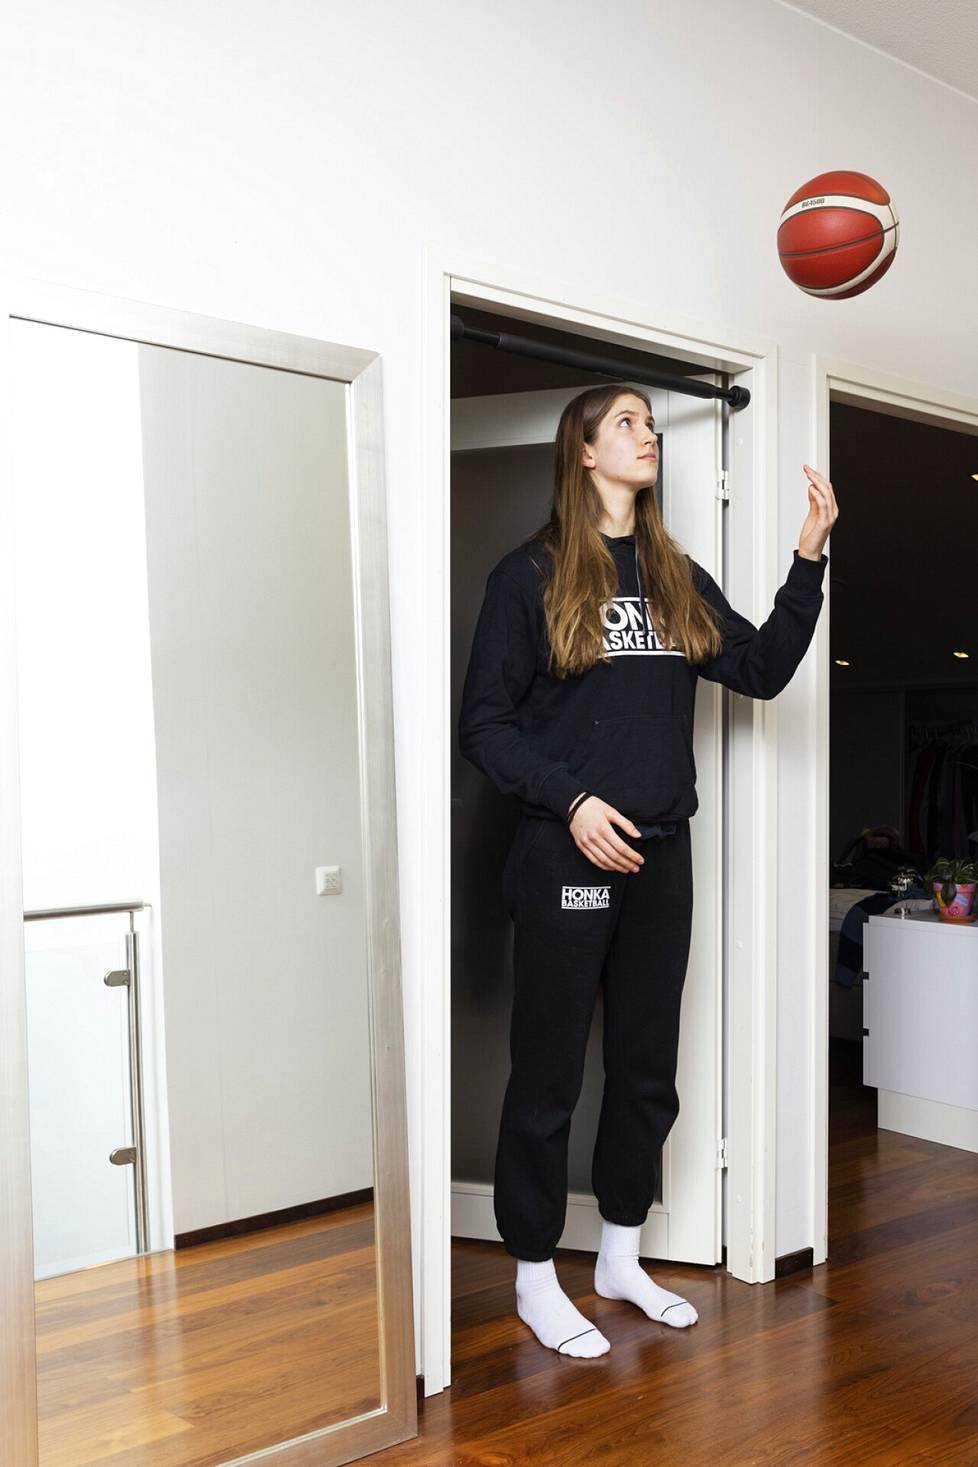 Elsa Lemmilä at the door of her room at home in Espoo.